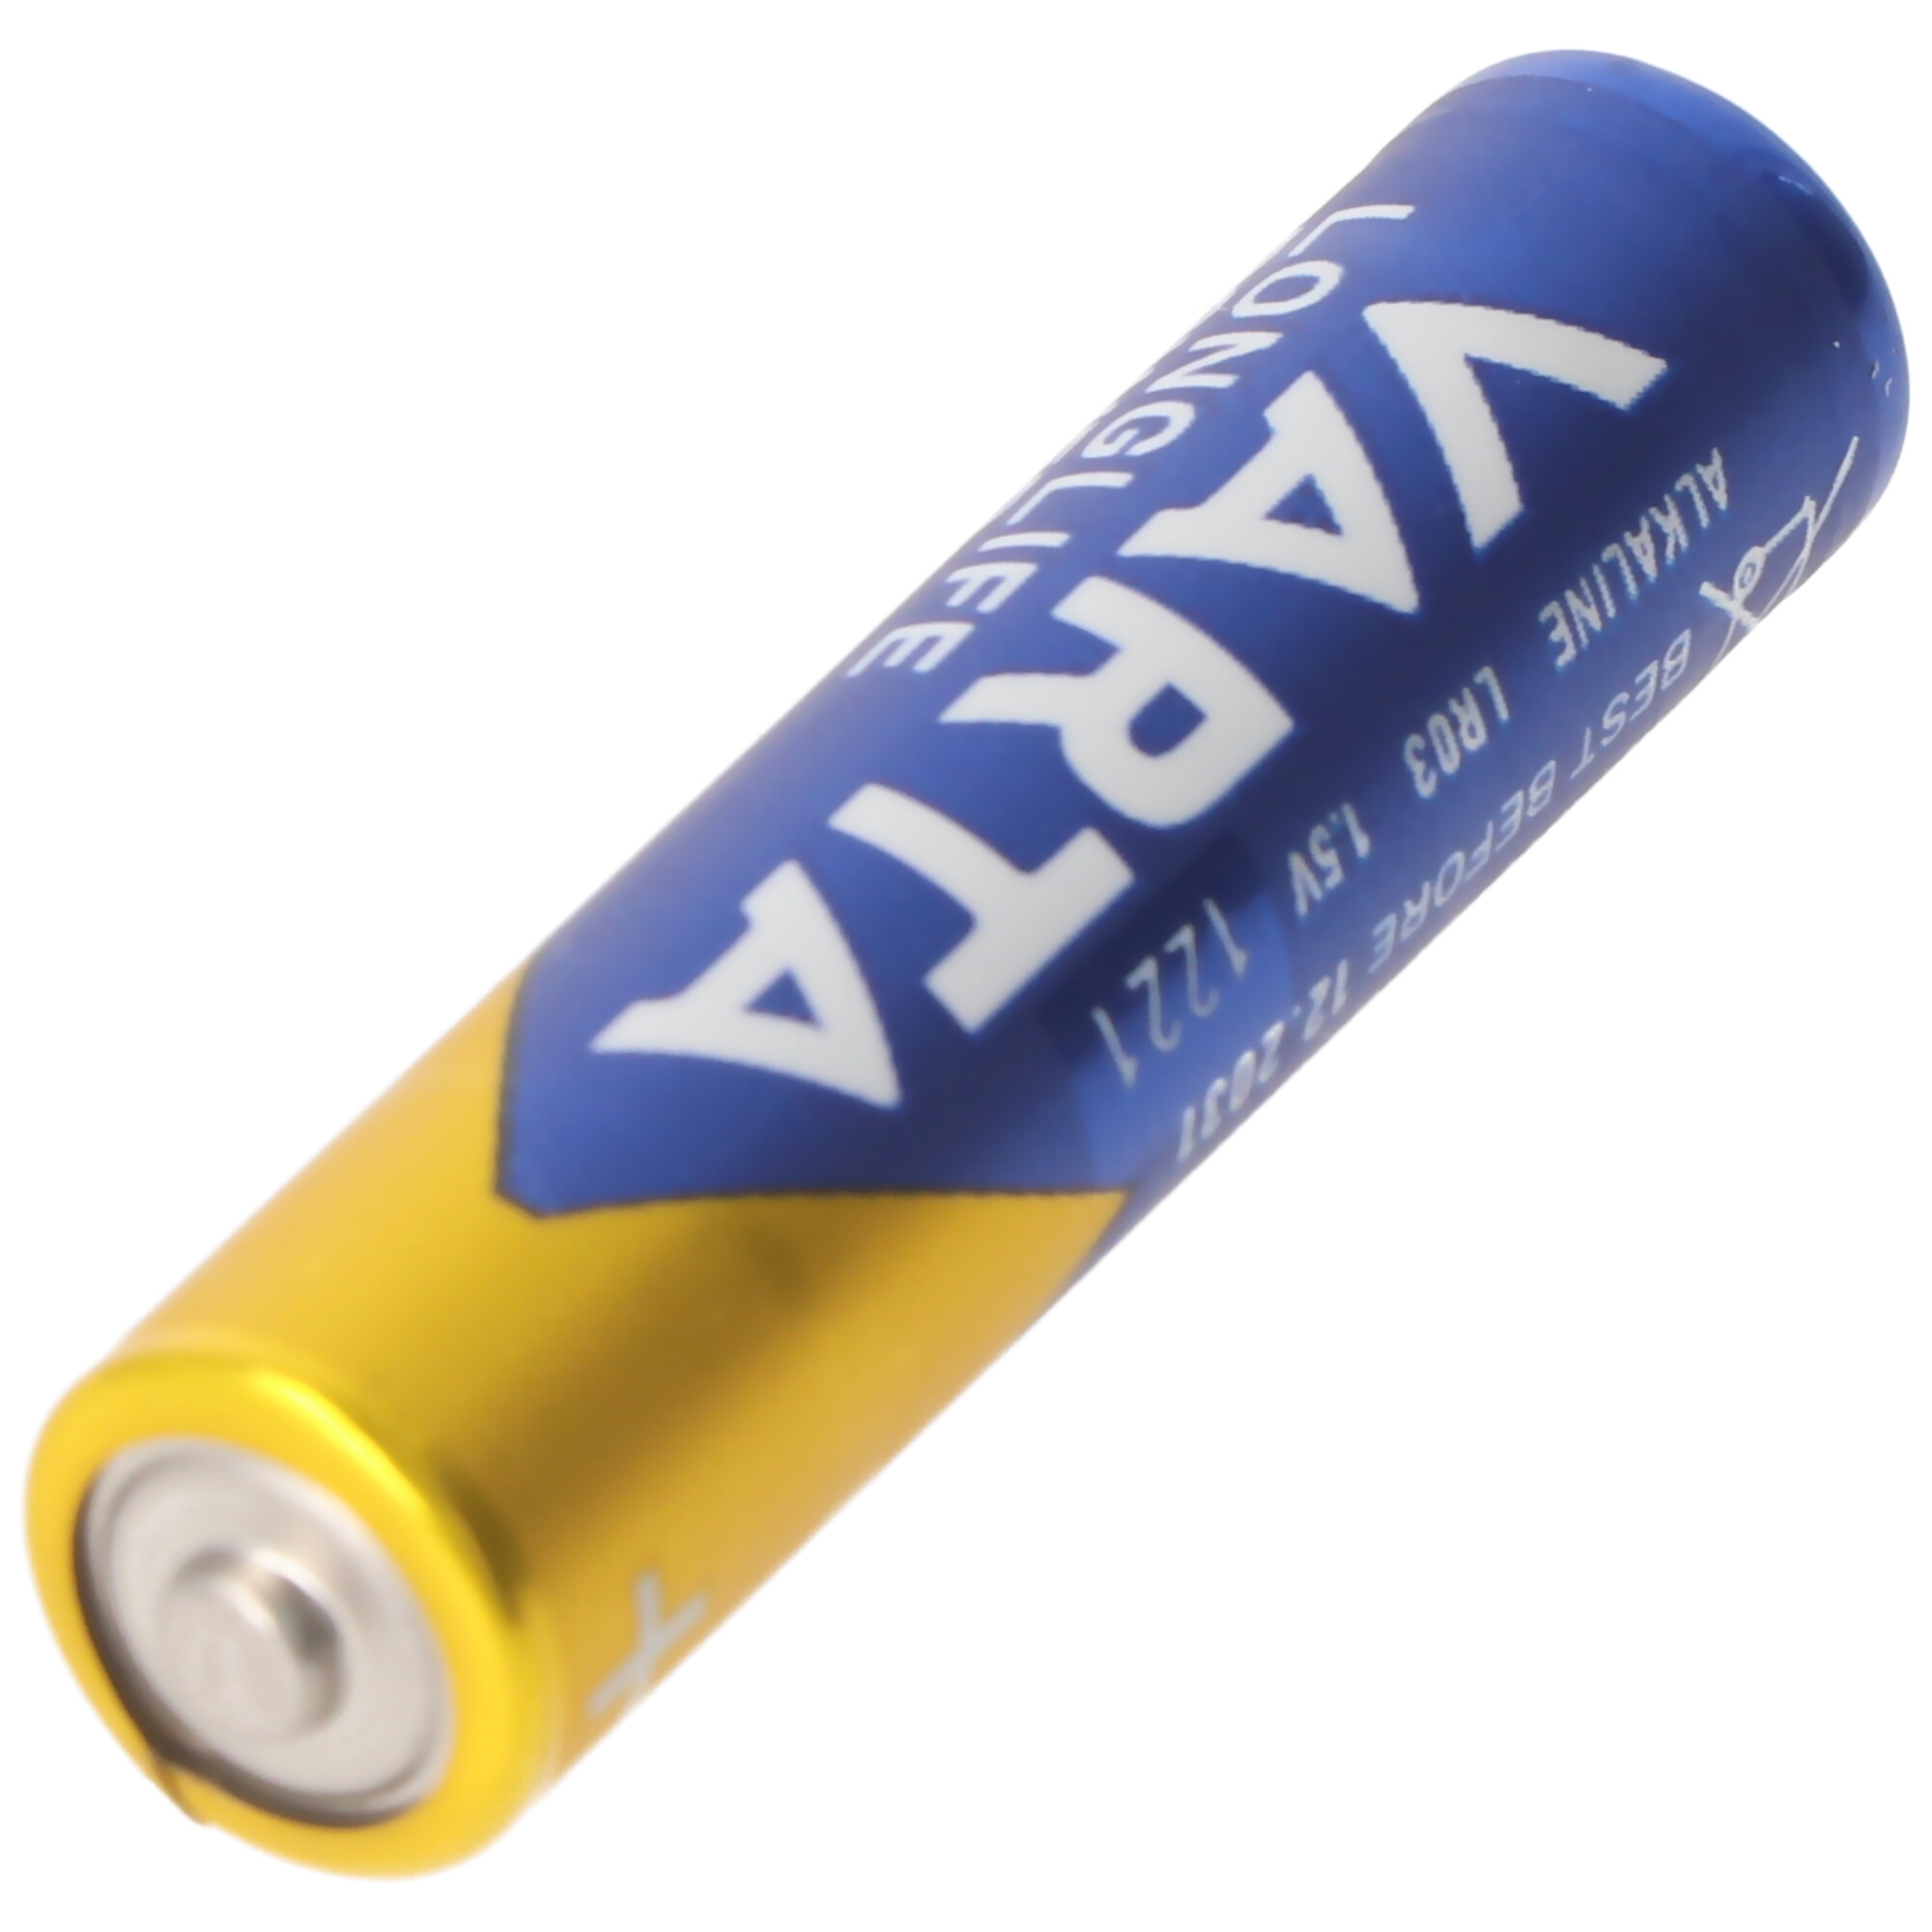 VARTA Longlife 4903 distancia Micro Batterie Ah Batterie, LR03 Blister) Power Mando AlMn, AAA (4er 1.5 Volt, 1.26